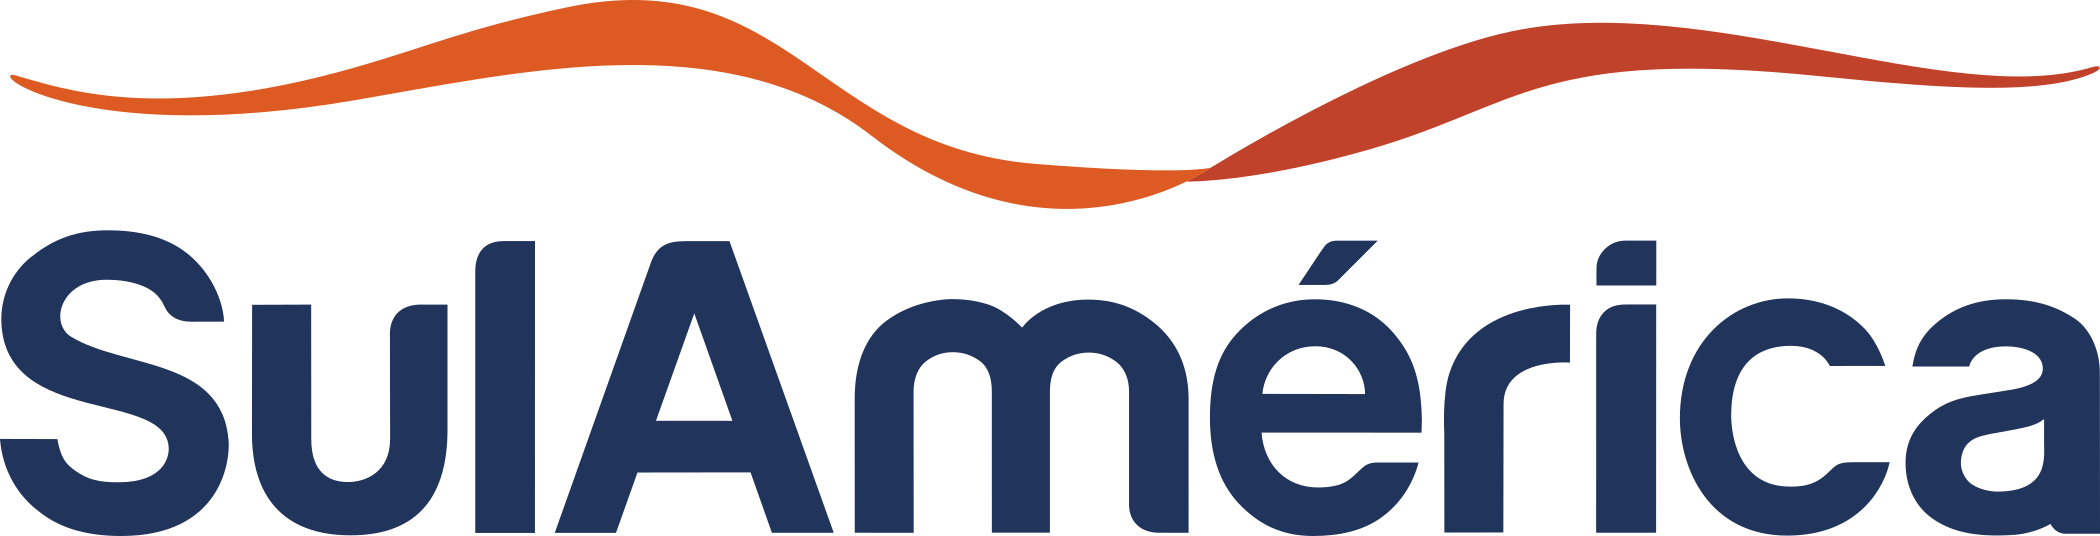 SulAmérica logo.